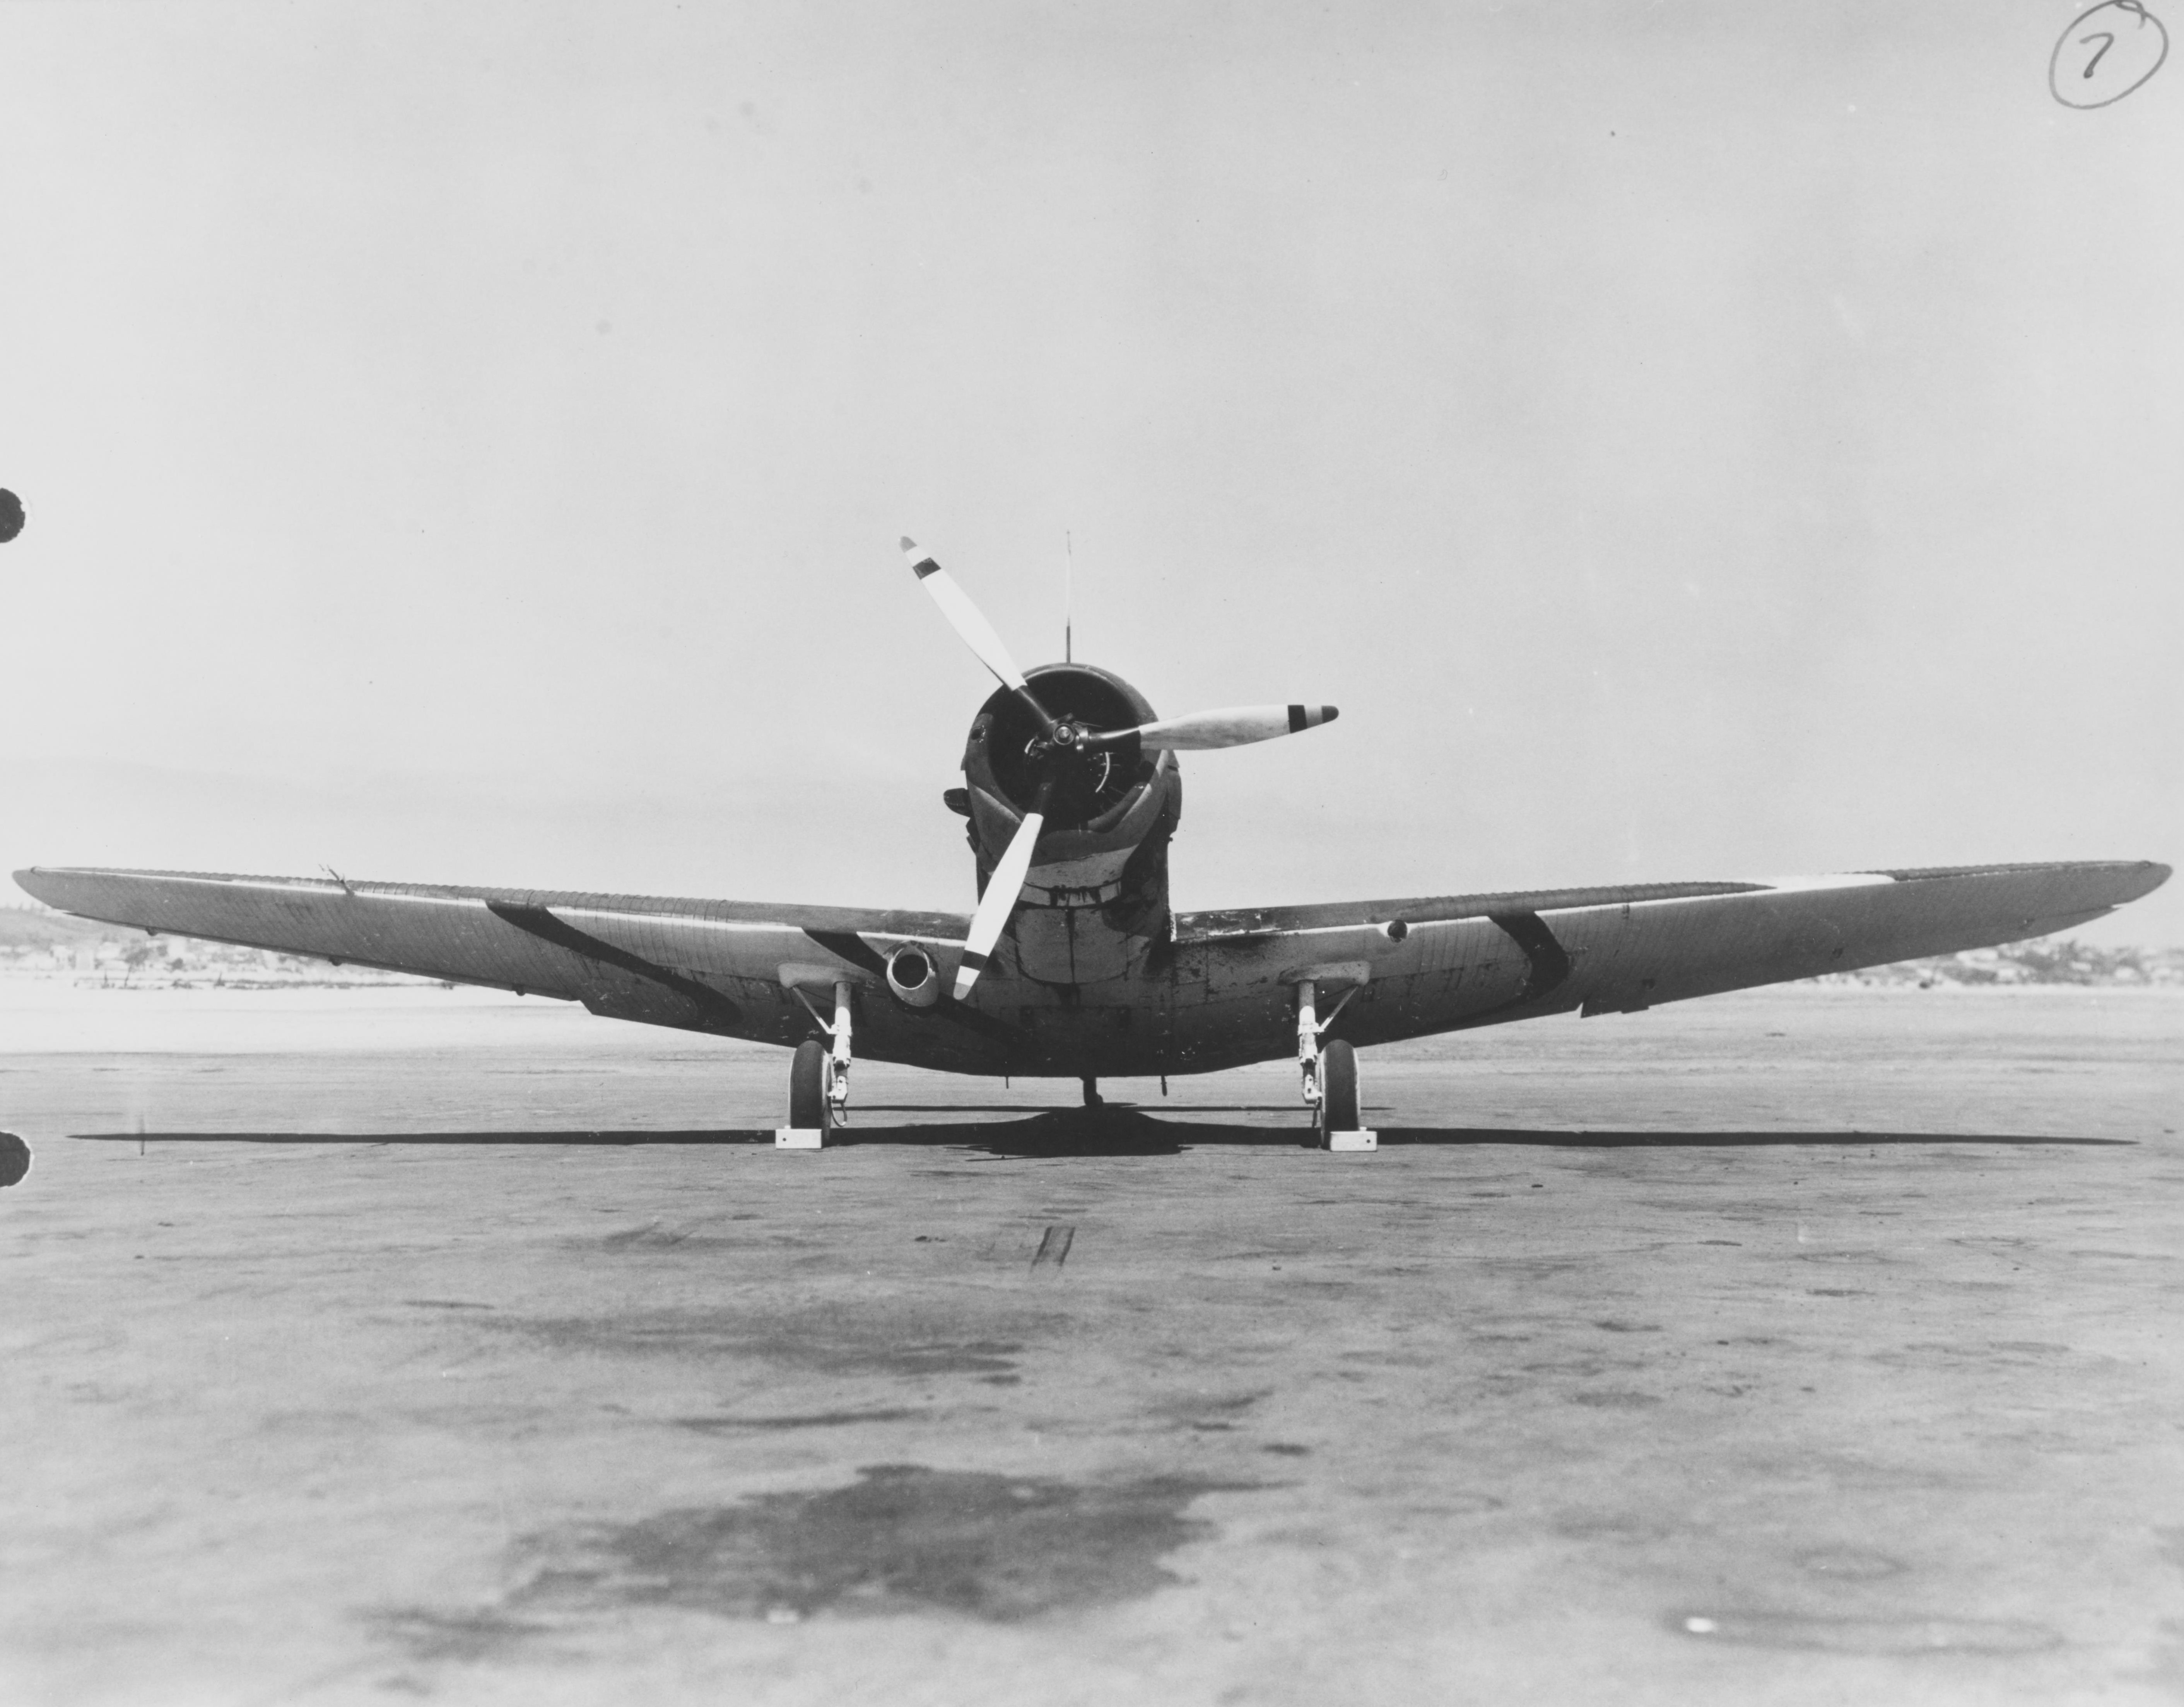 Douglas TBD-1 torpedo Plane